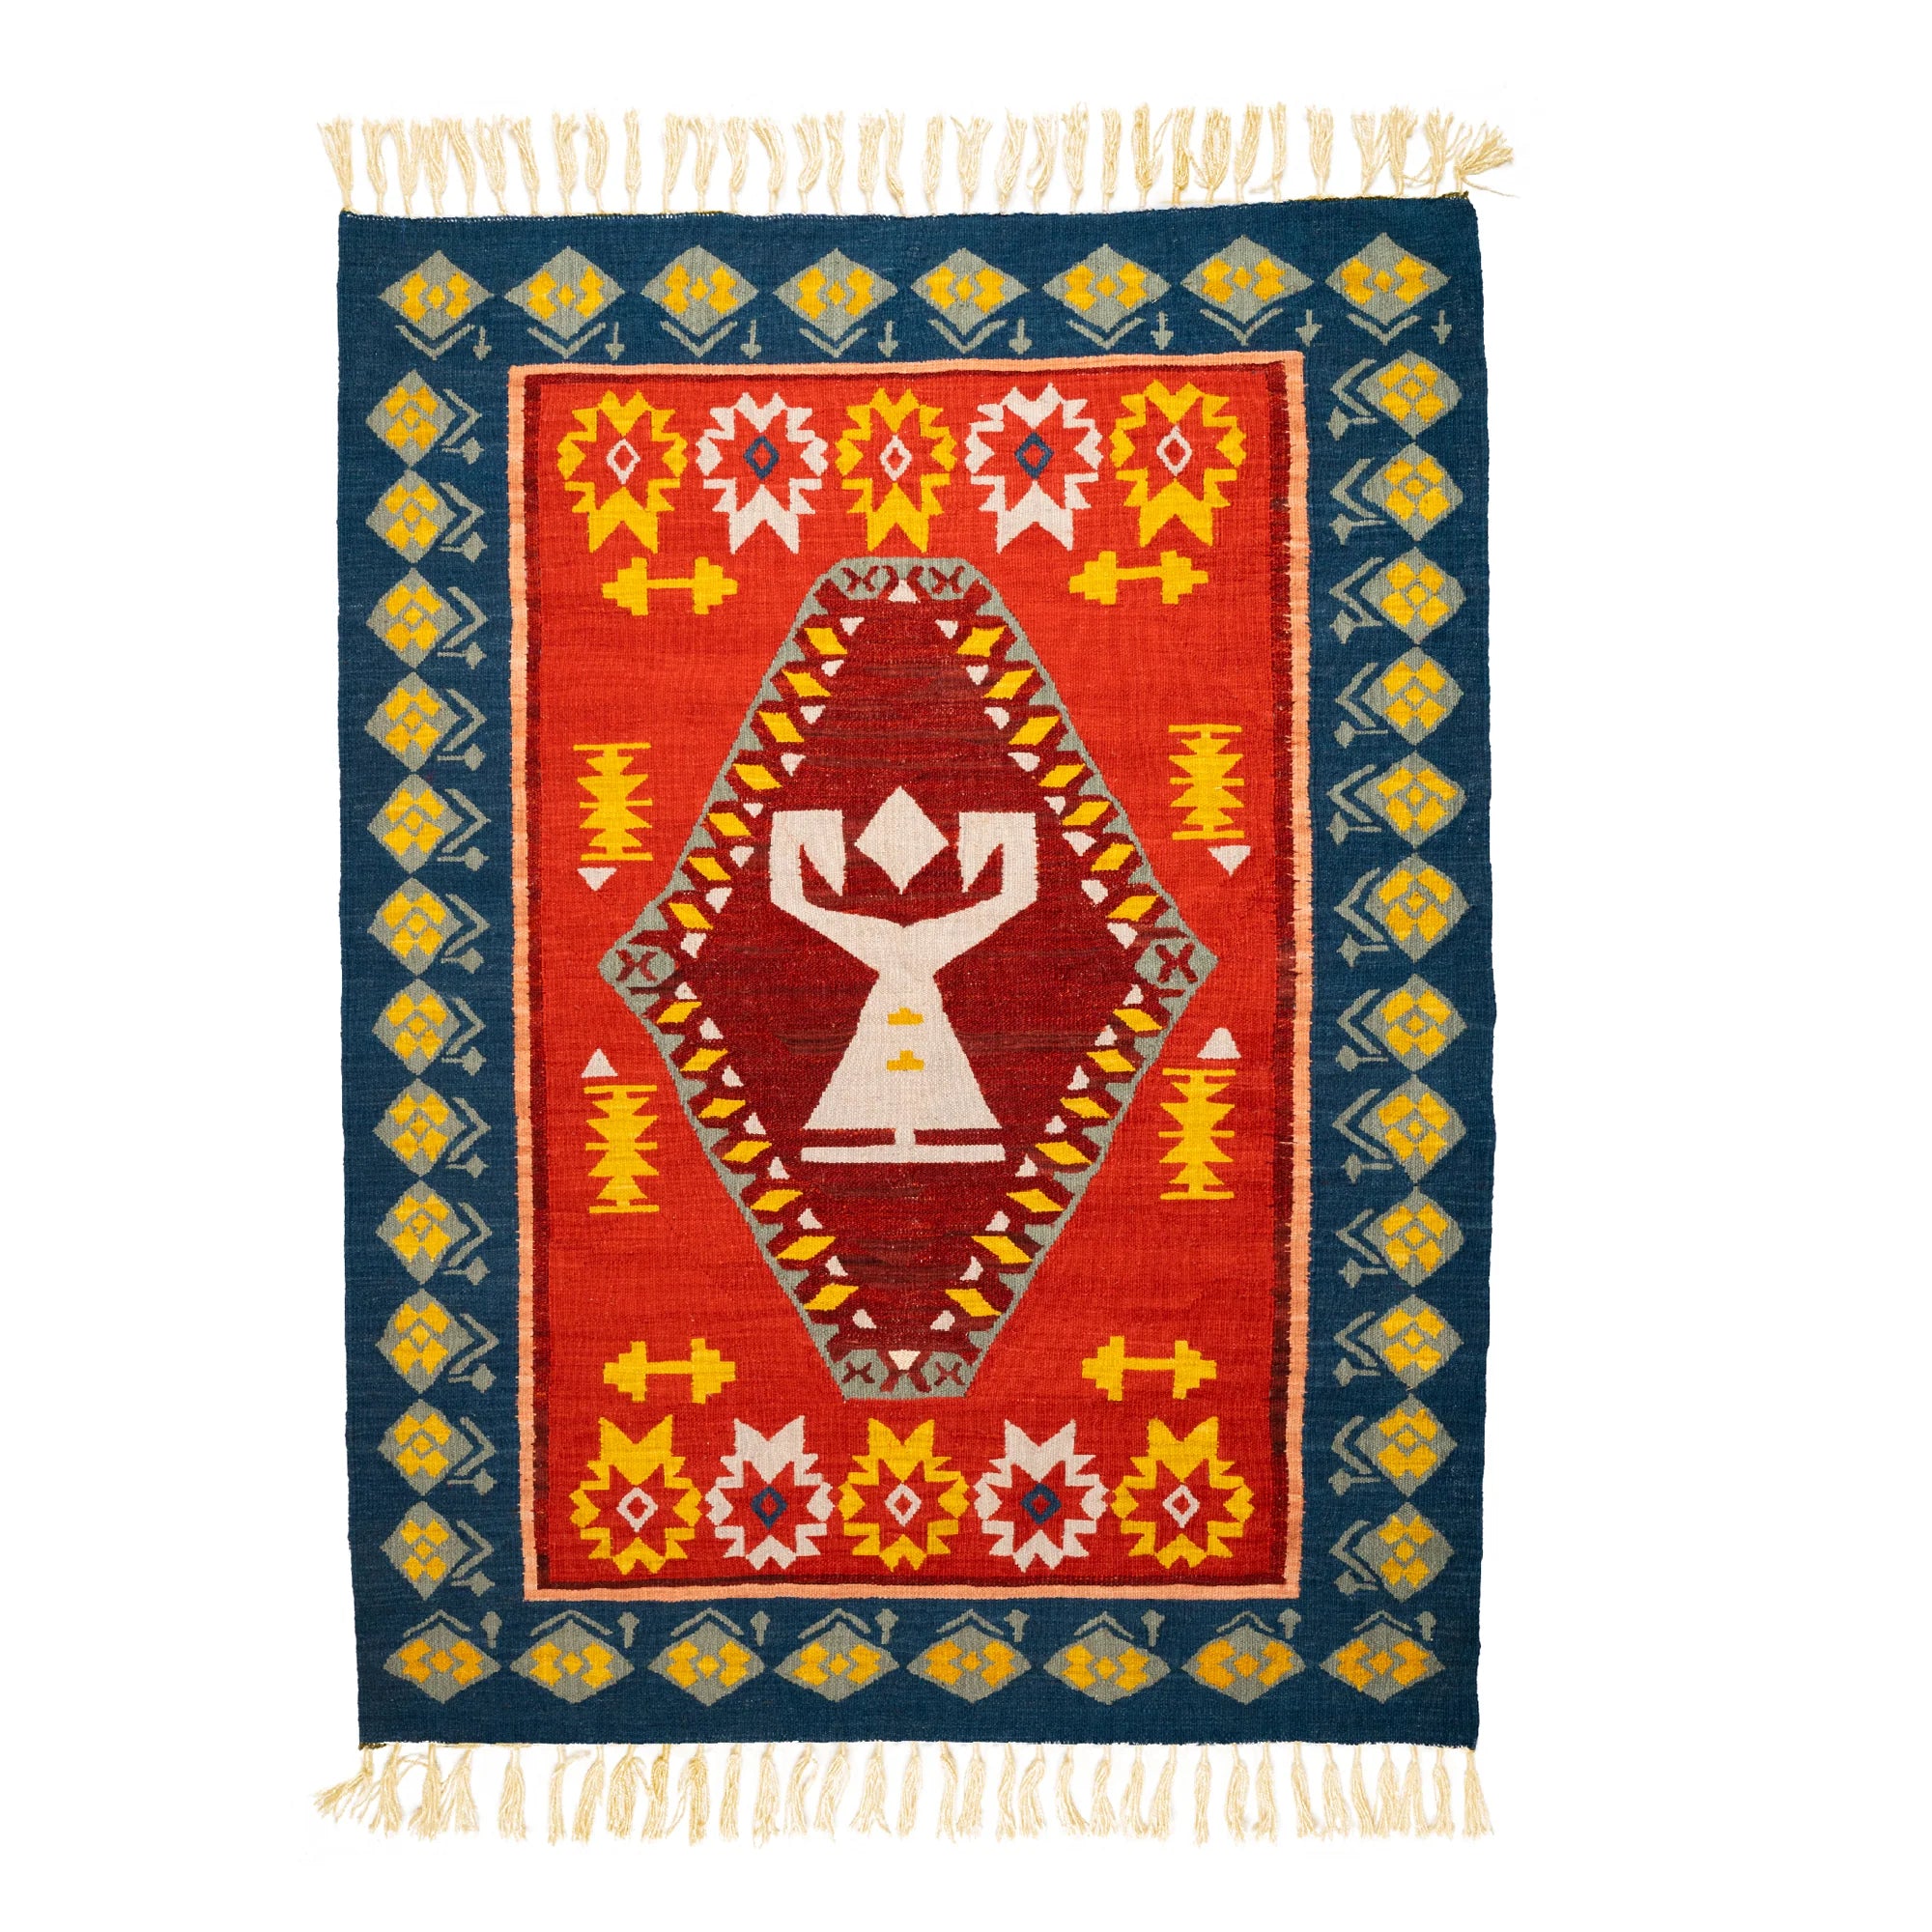 The Symbols of Change Handwoven Carpet